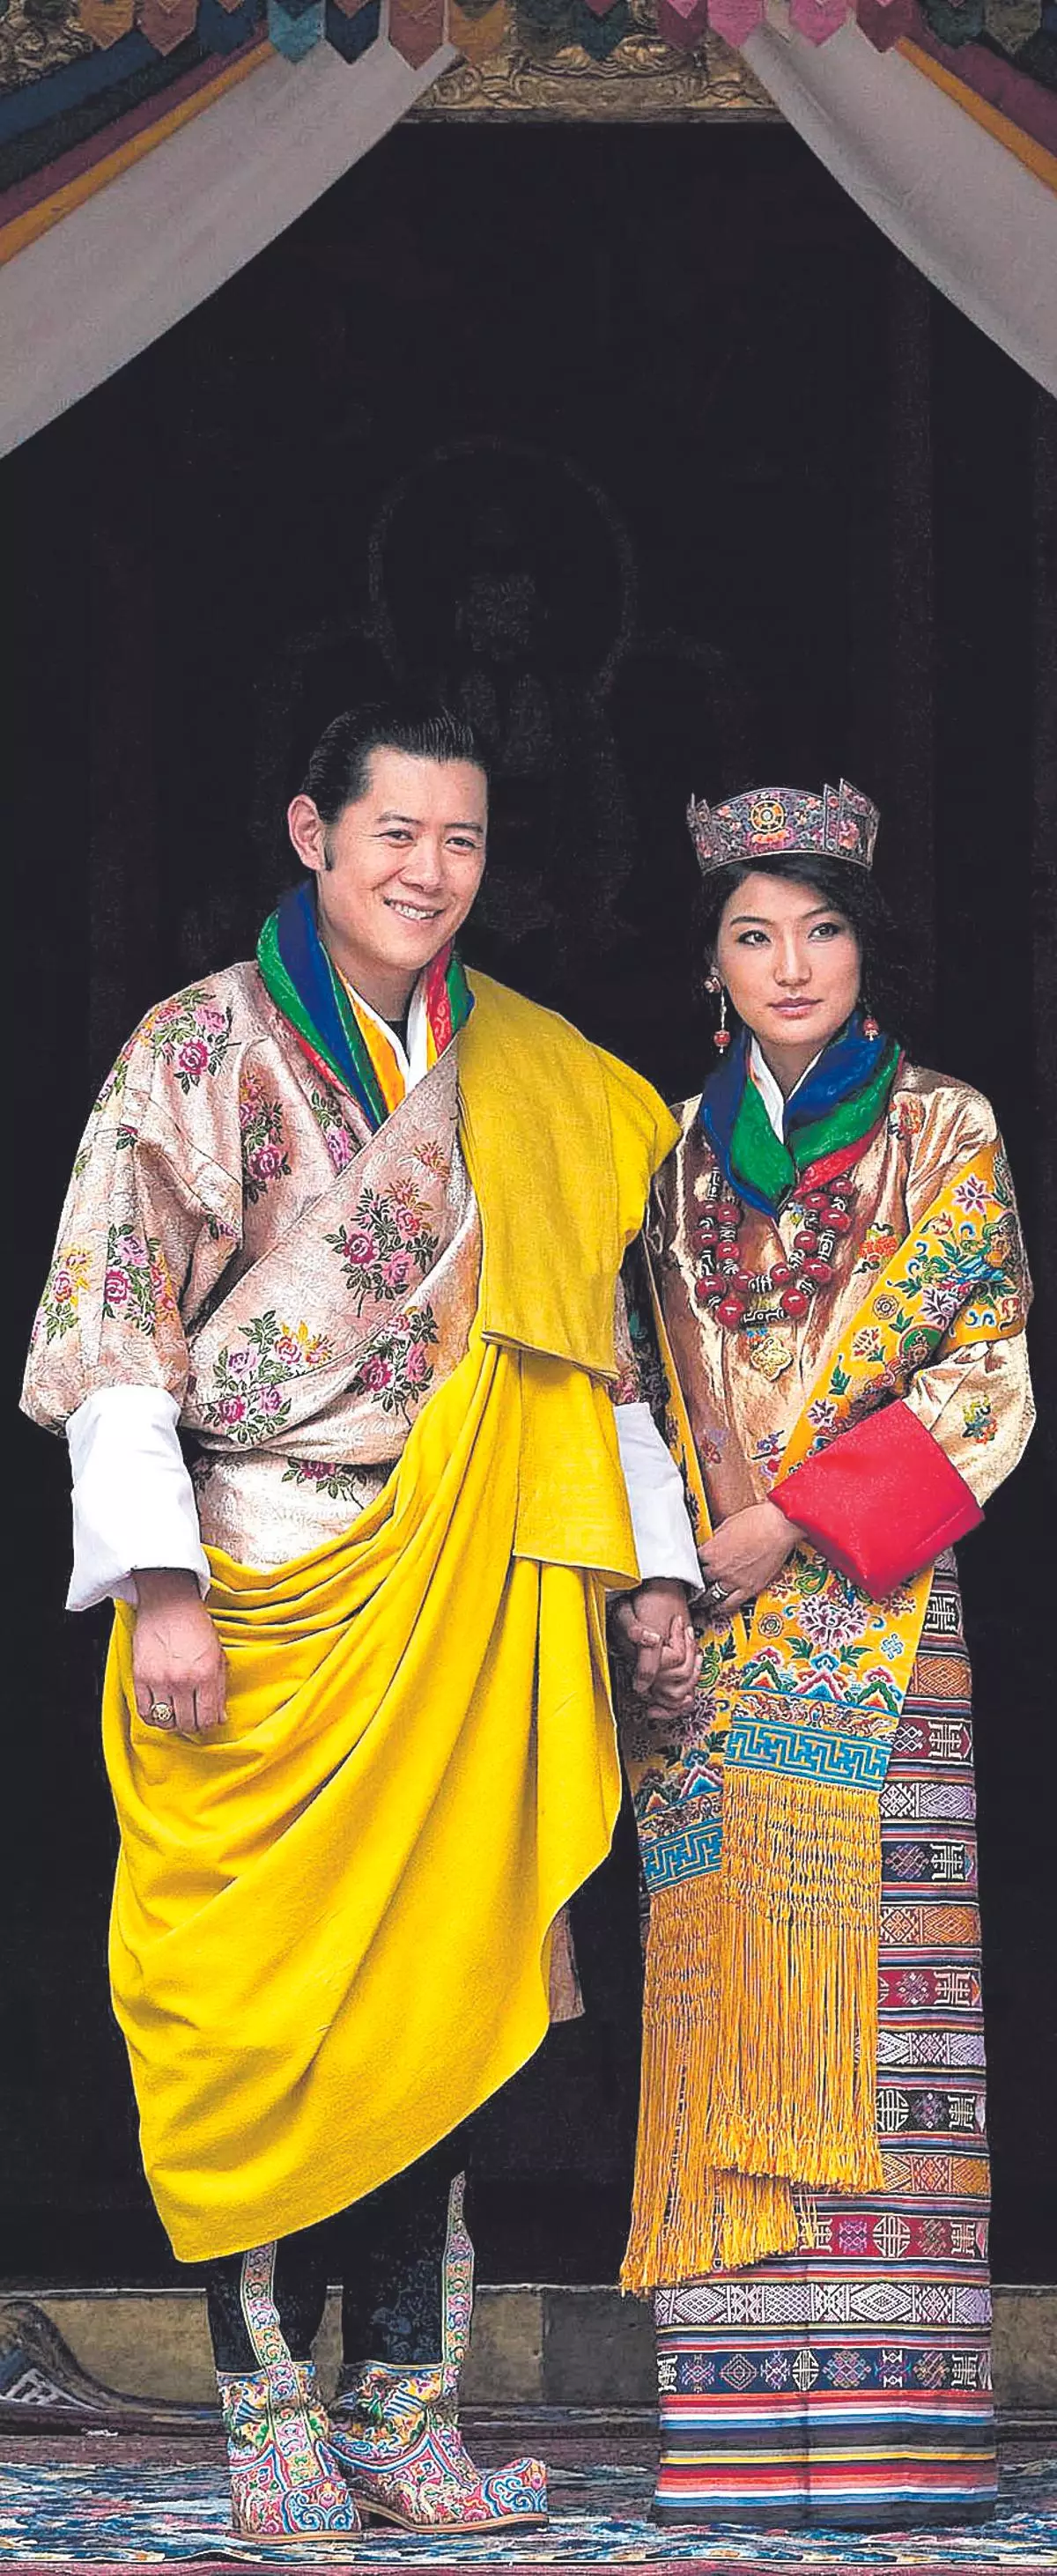 A los turismofobos les debe de encantar Bután